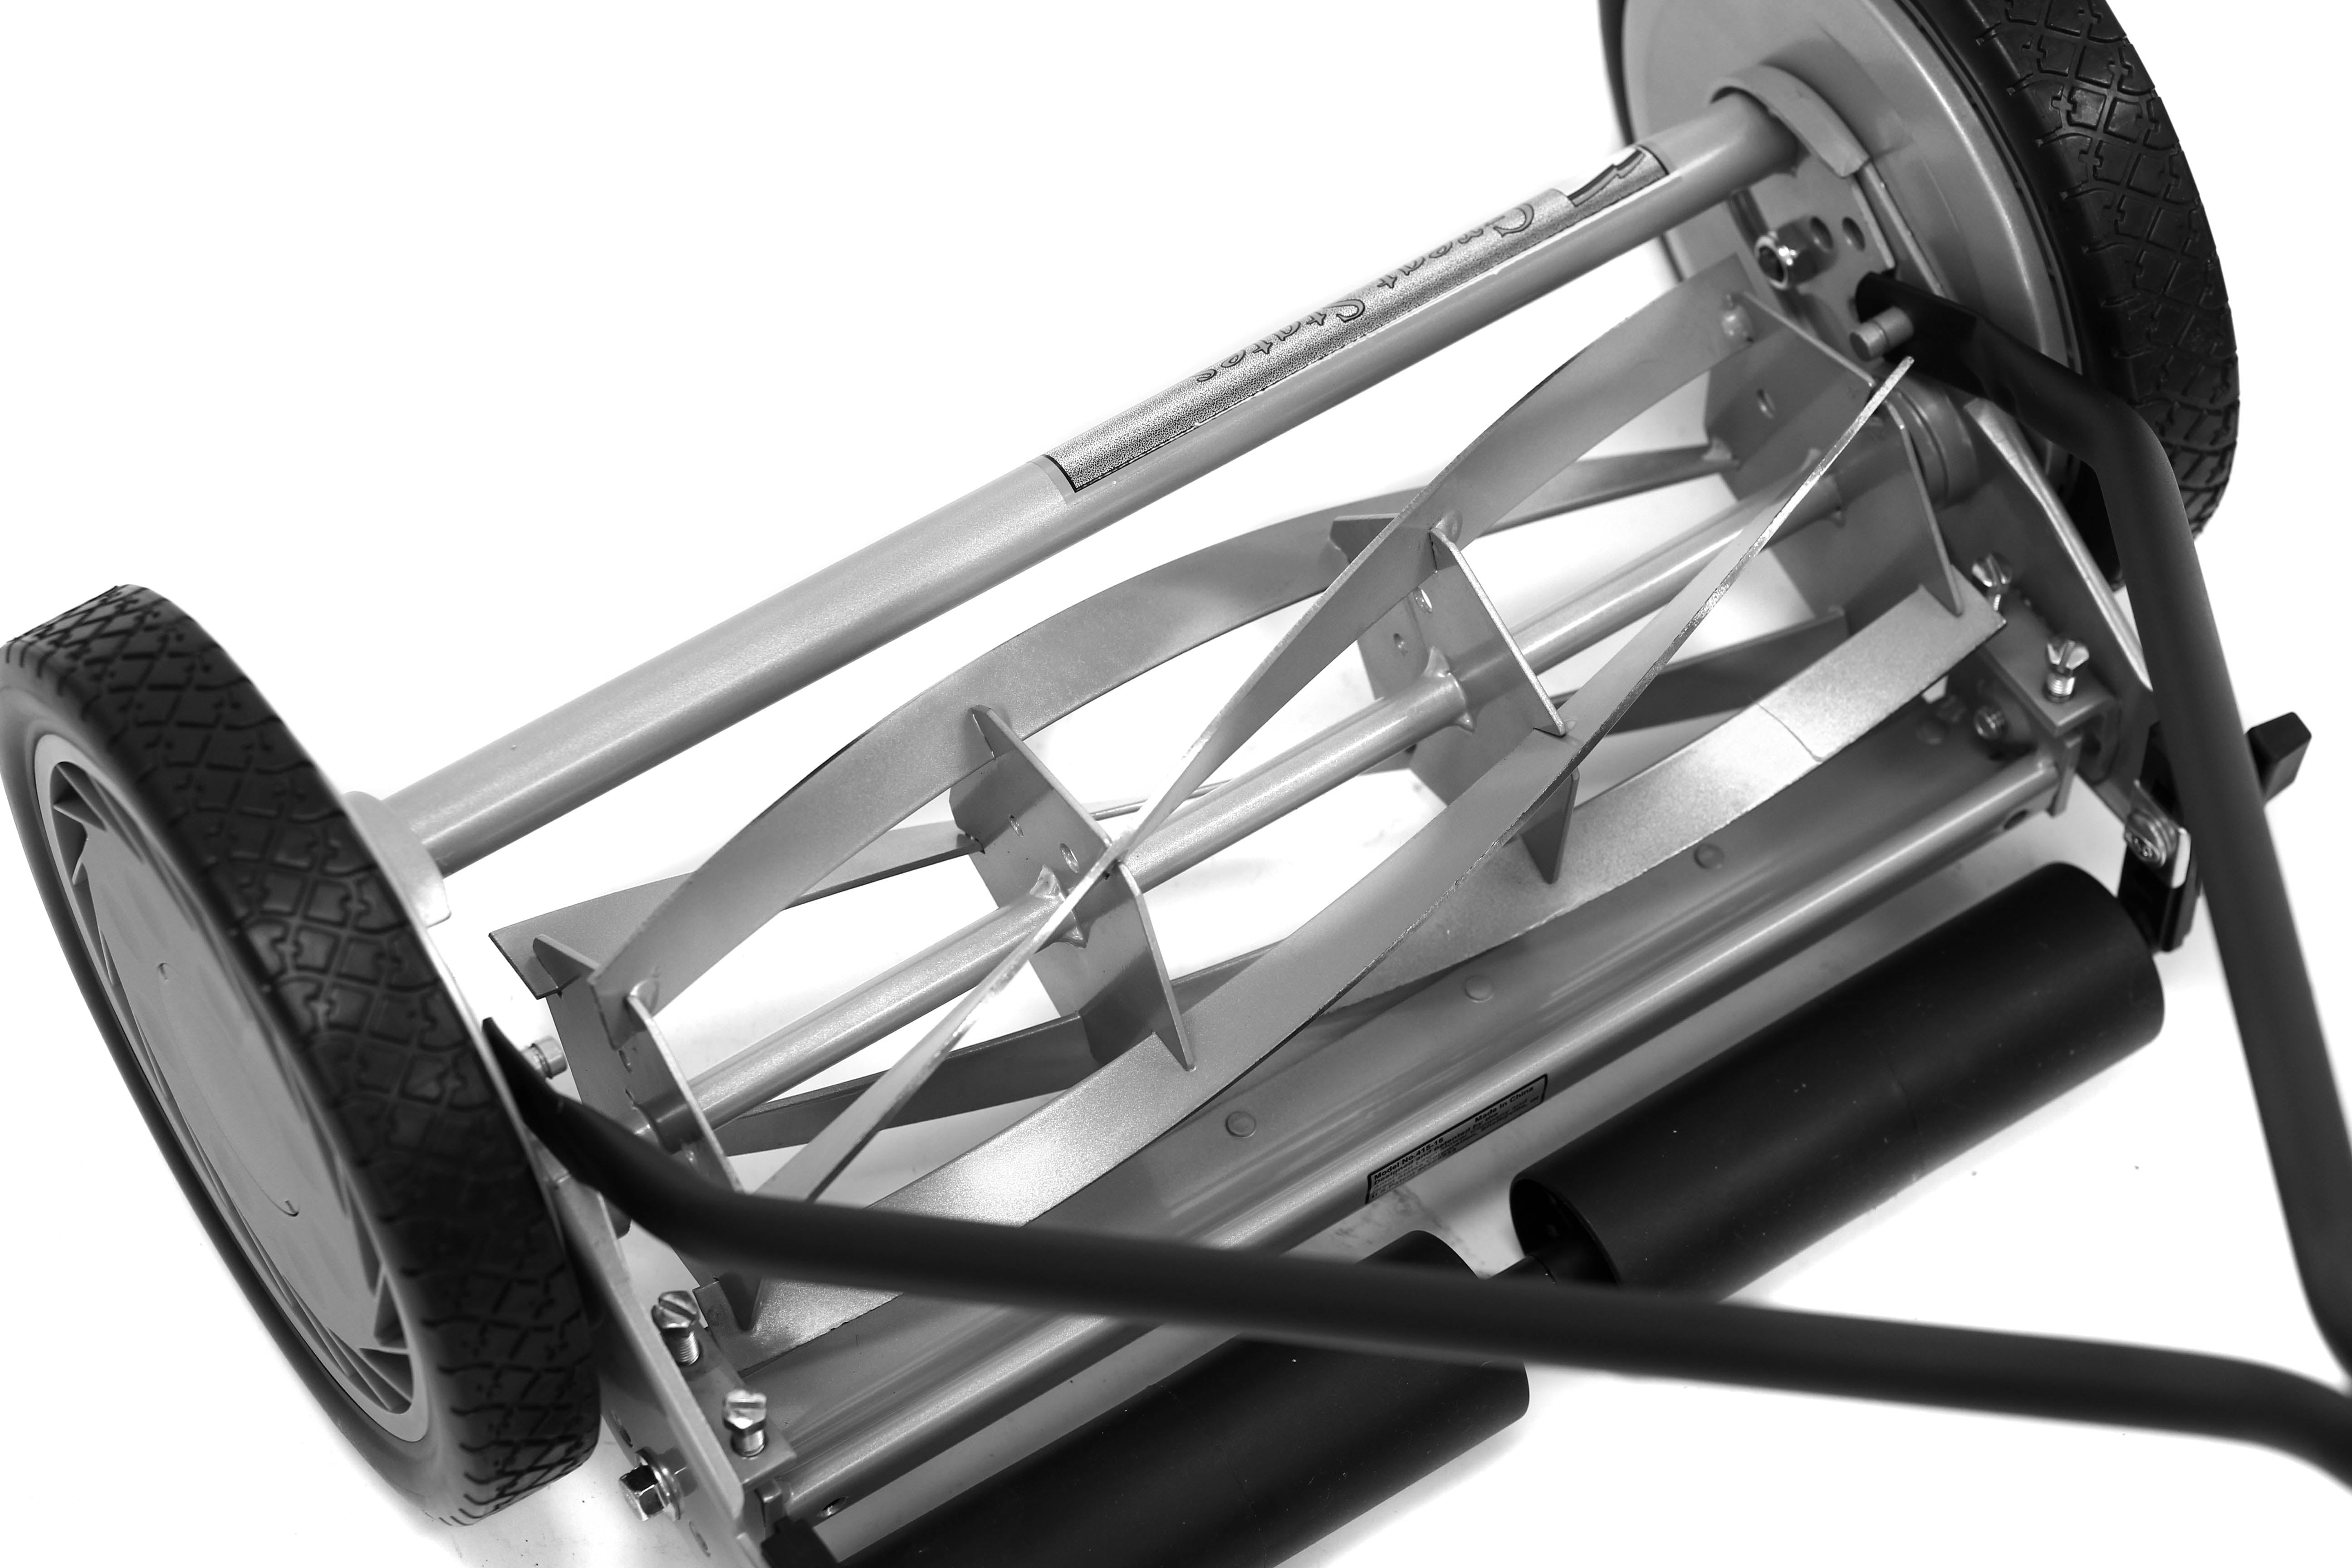 Great States 16 Manual Reel Mower with Sharpening Kit – American